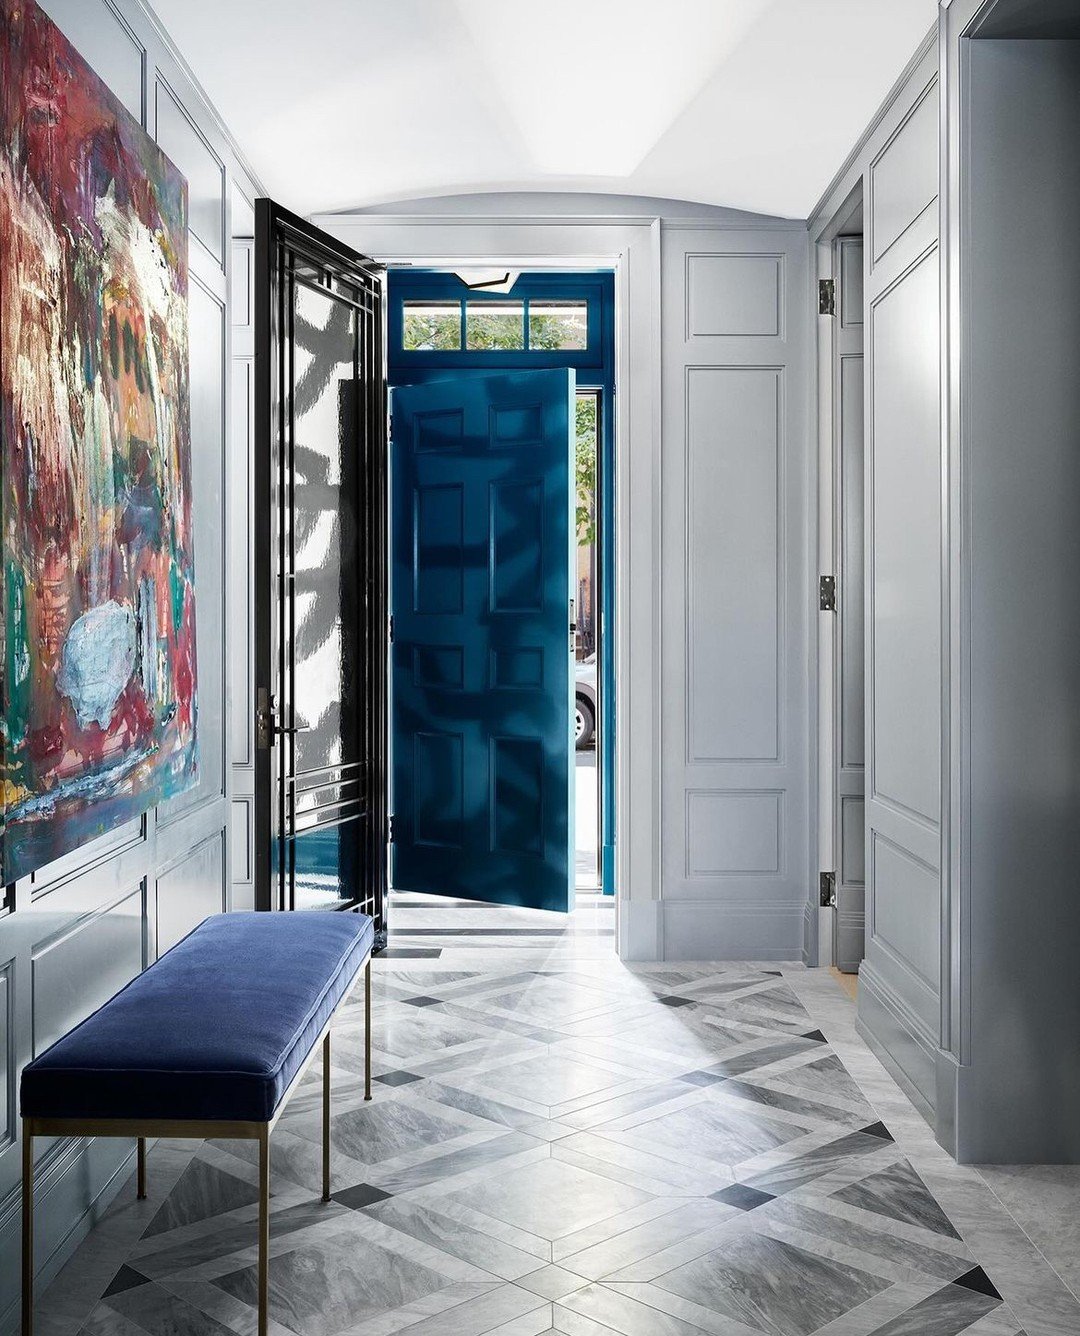 Foyer goals! (Design by @aliciamurphydesign, photo by @brittanyambridge) #thecravecollective #interiordesign #design #interiors123 #home